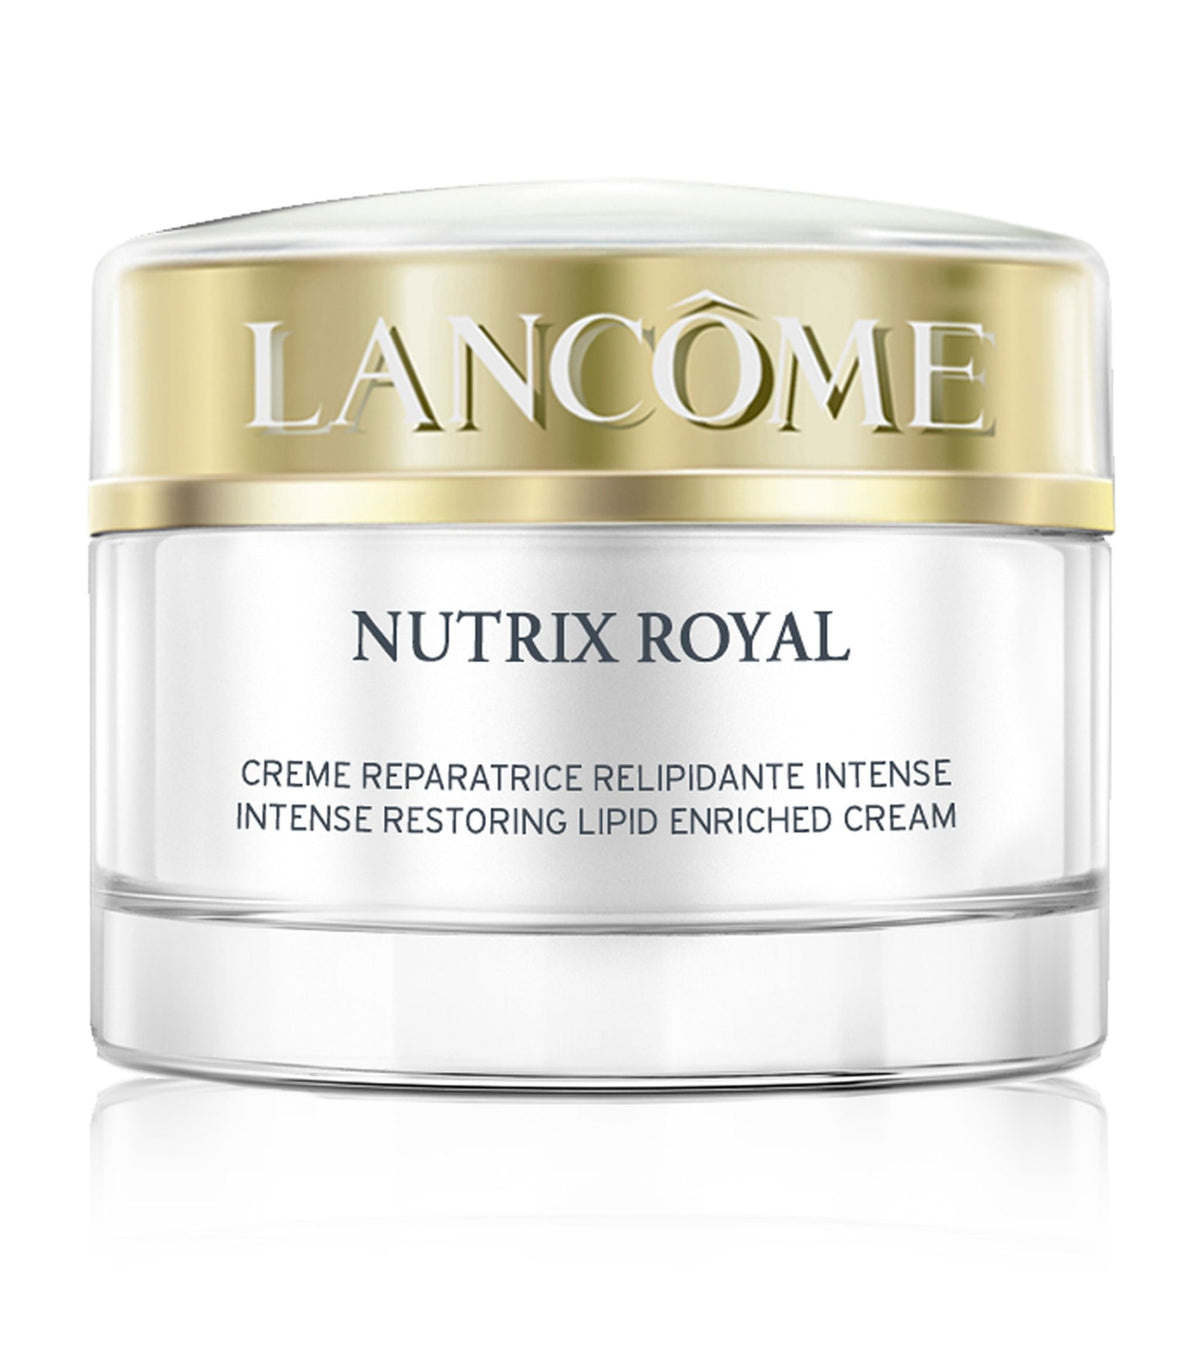 Lancome Nutrix Royal Cream - 50ml